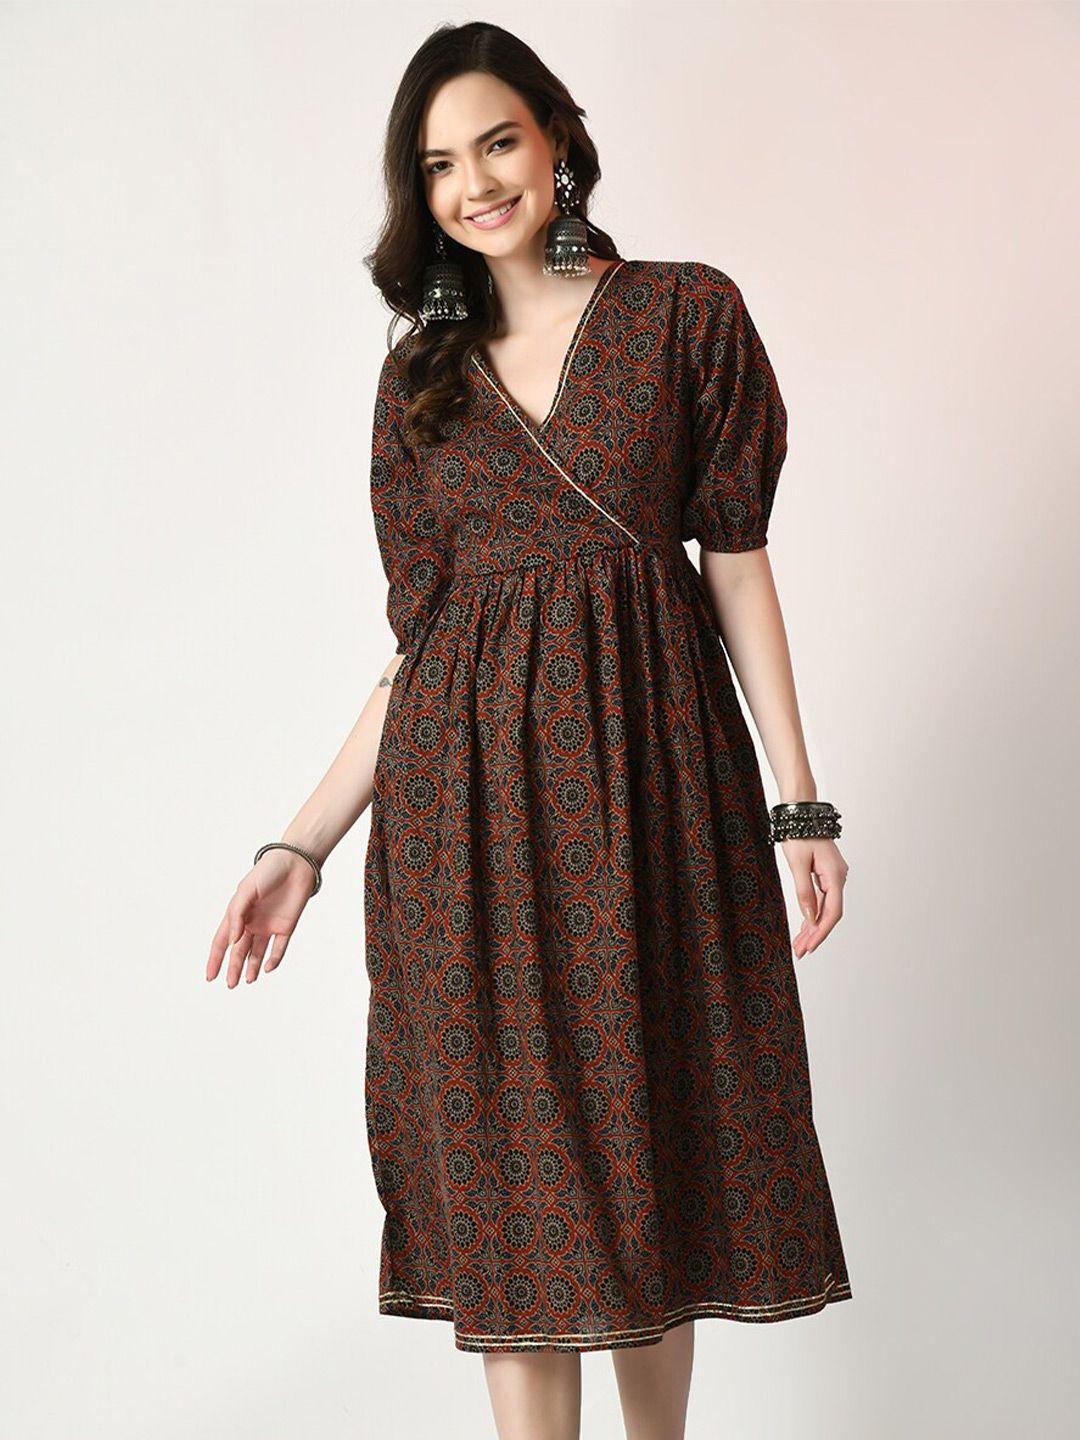 sangria-brown-ethnic-motifs-printed-cotton-wrap-dress